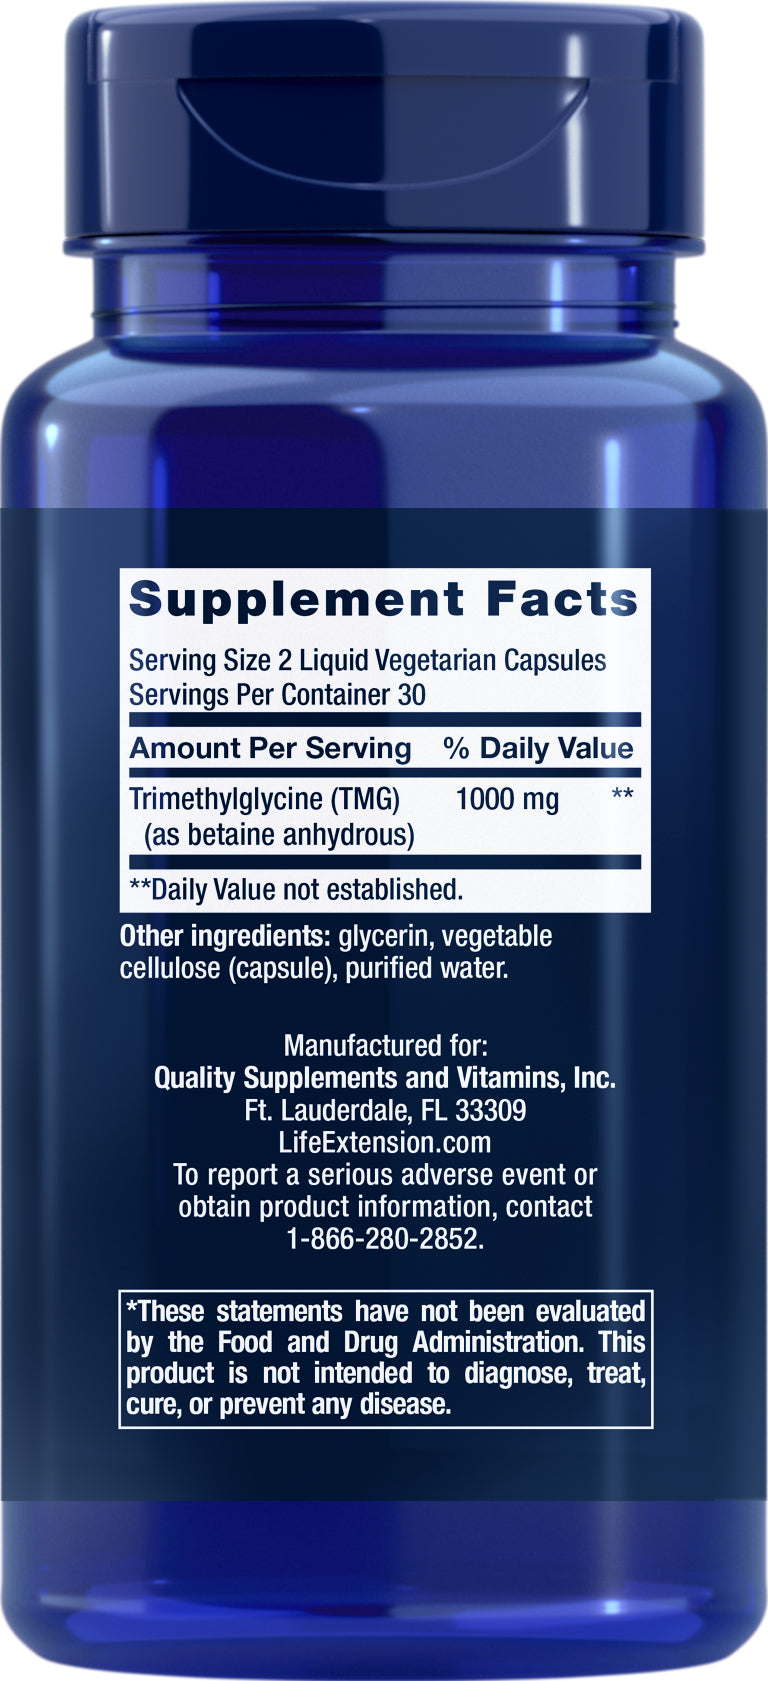 TMG 500 mg, 60 liquid vegetarian capsules by Life Extension